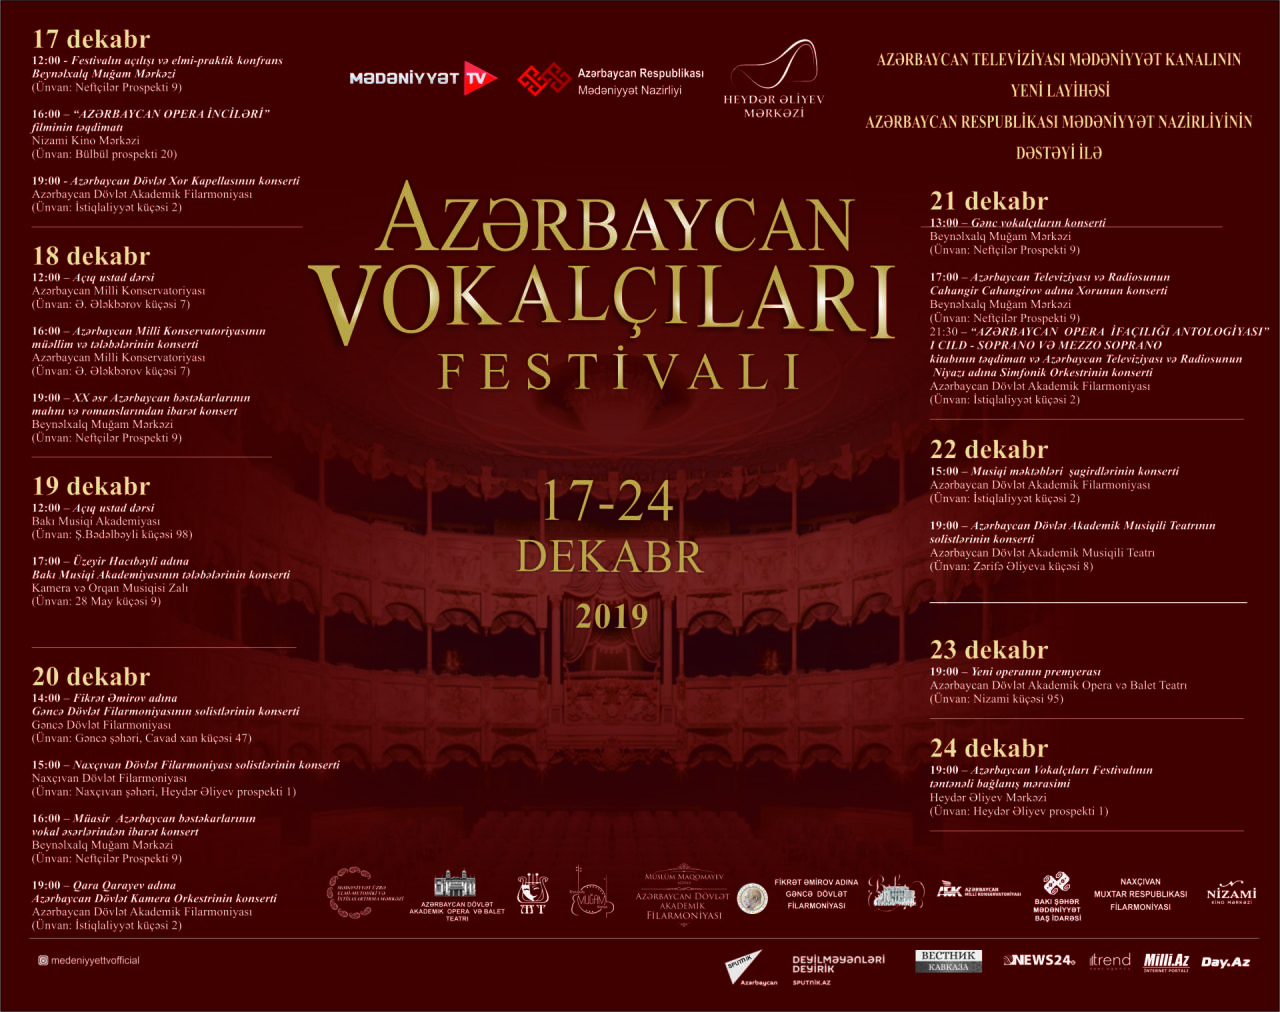 Republican Festival of Vocalists due in Baku